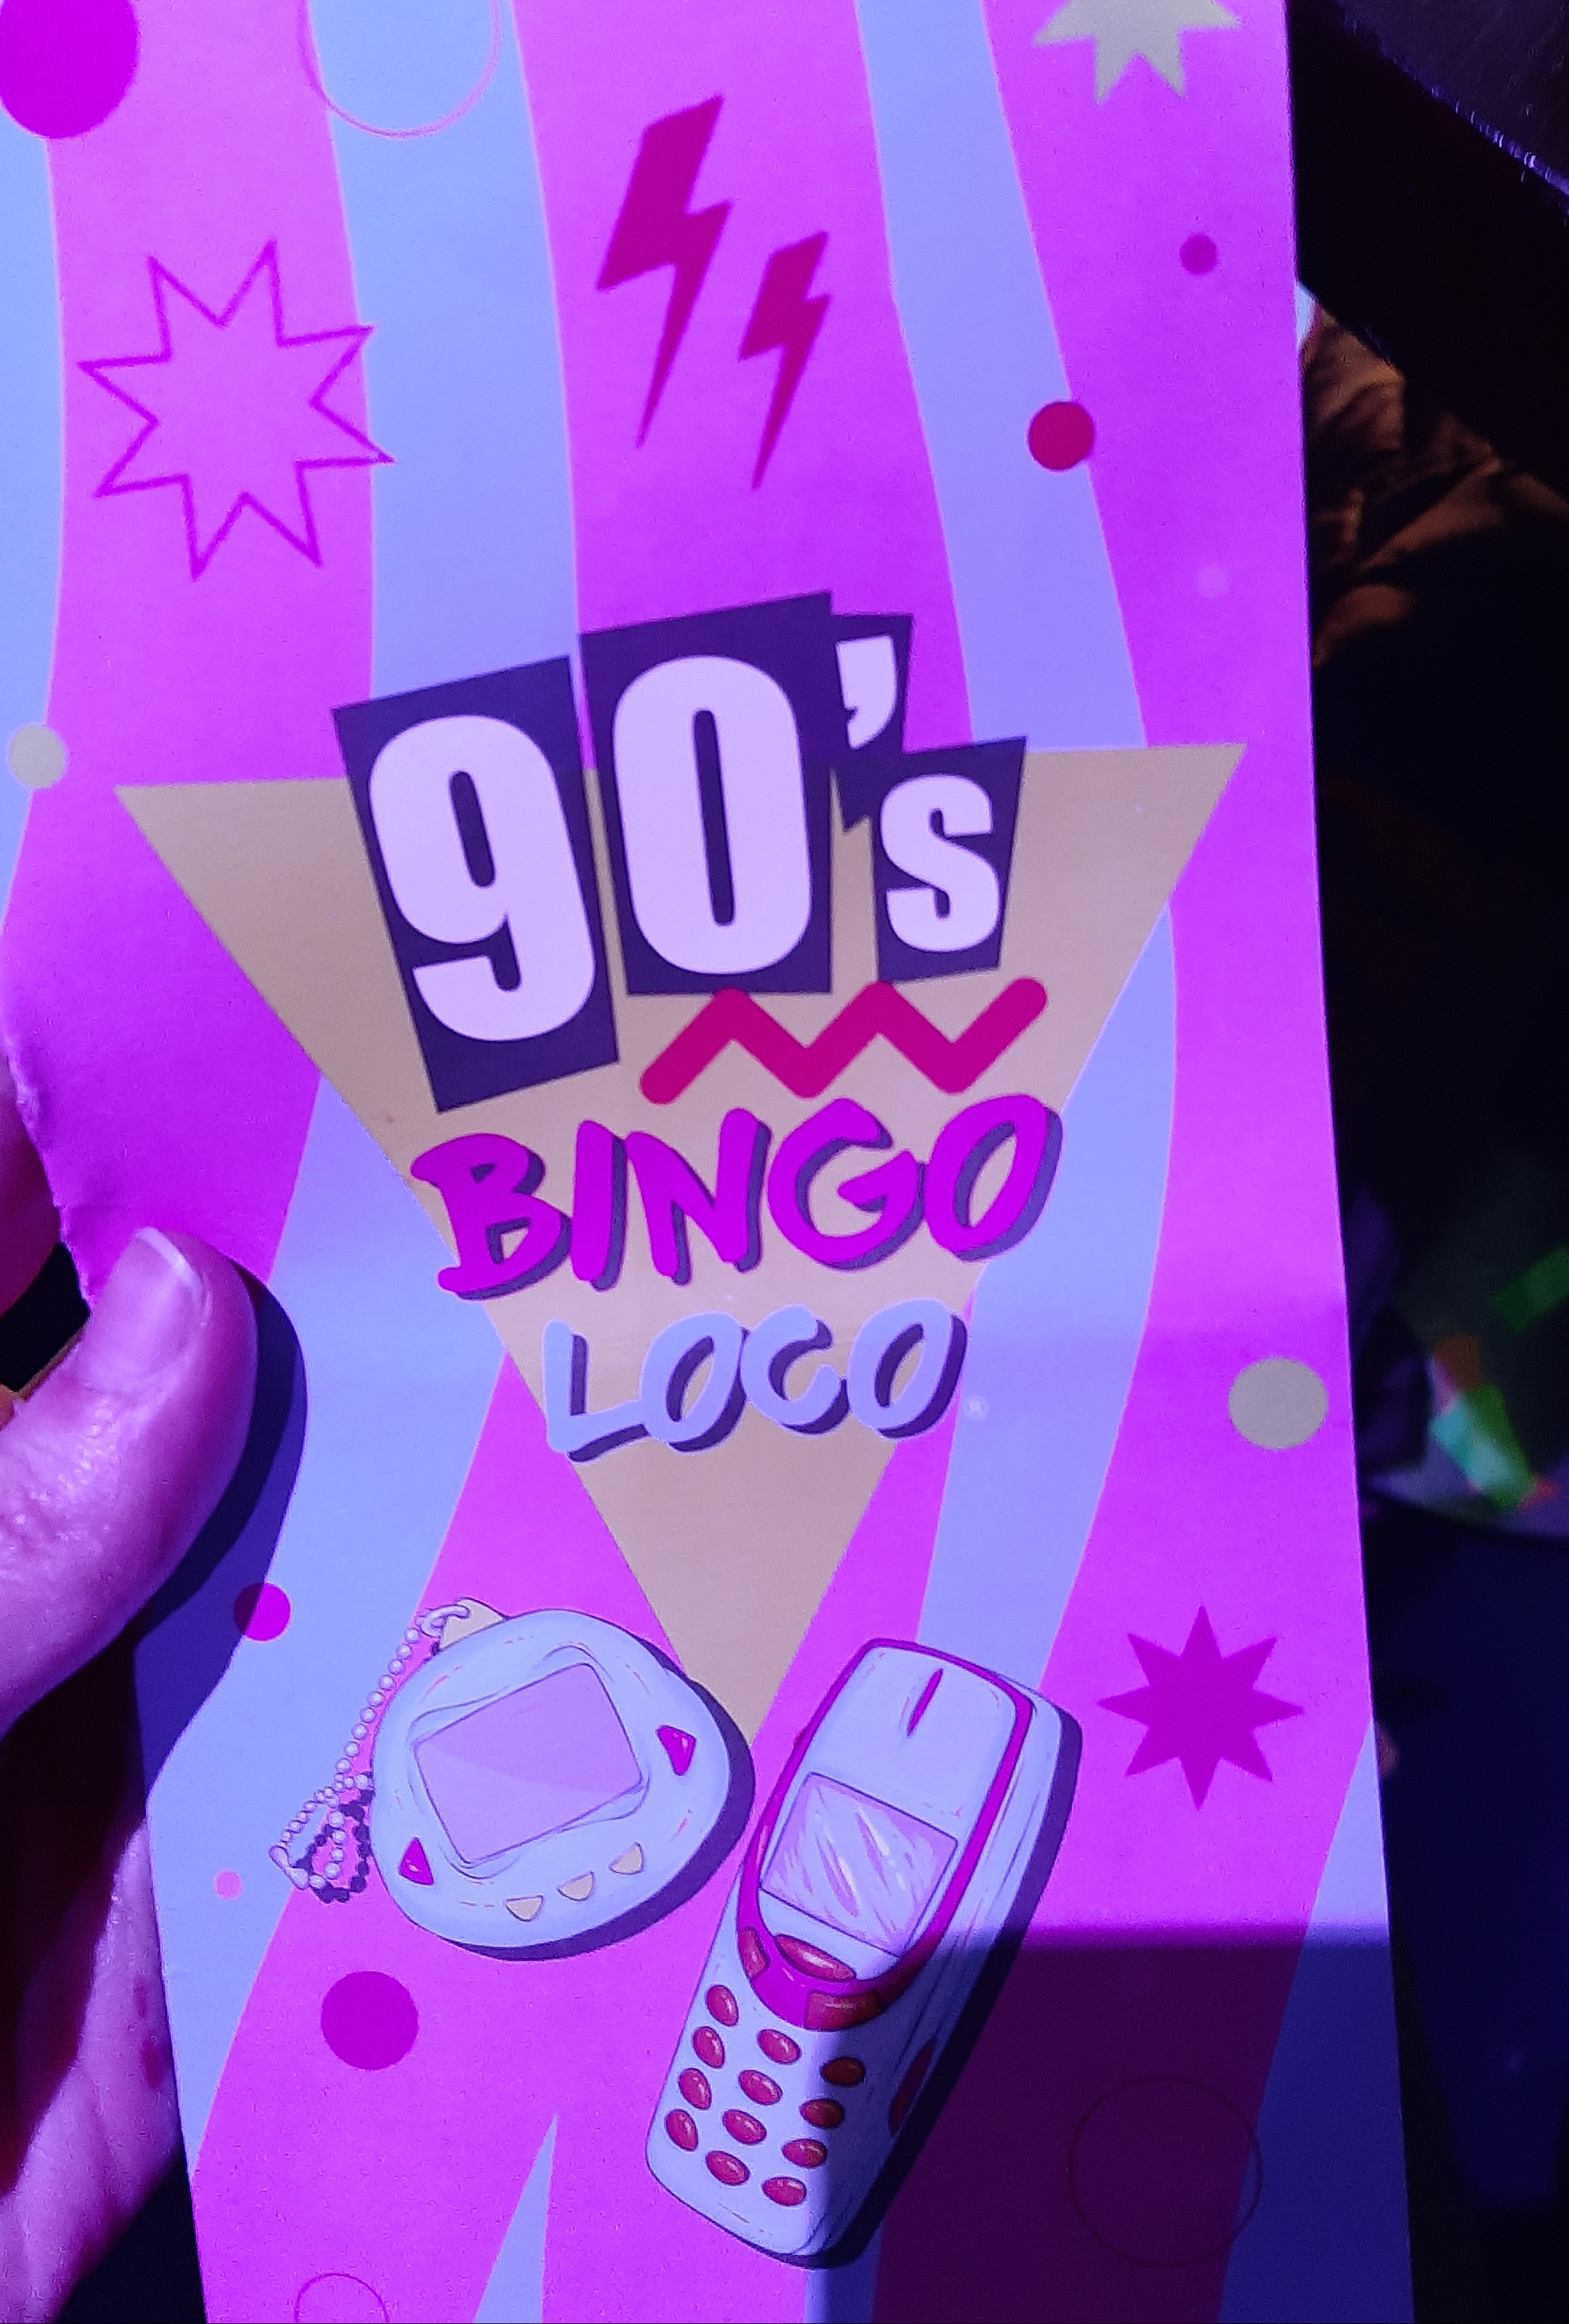 A flyer saying: "90's Bingo Loco"